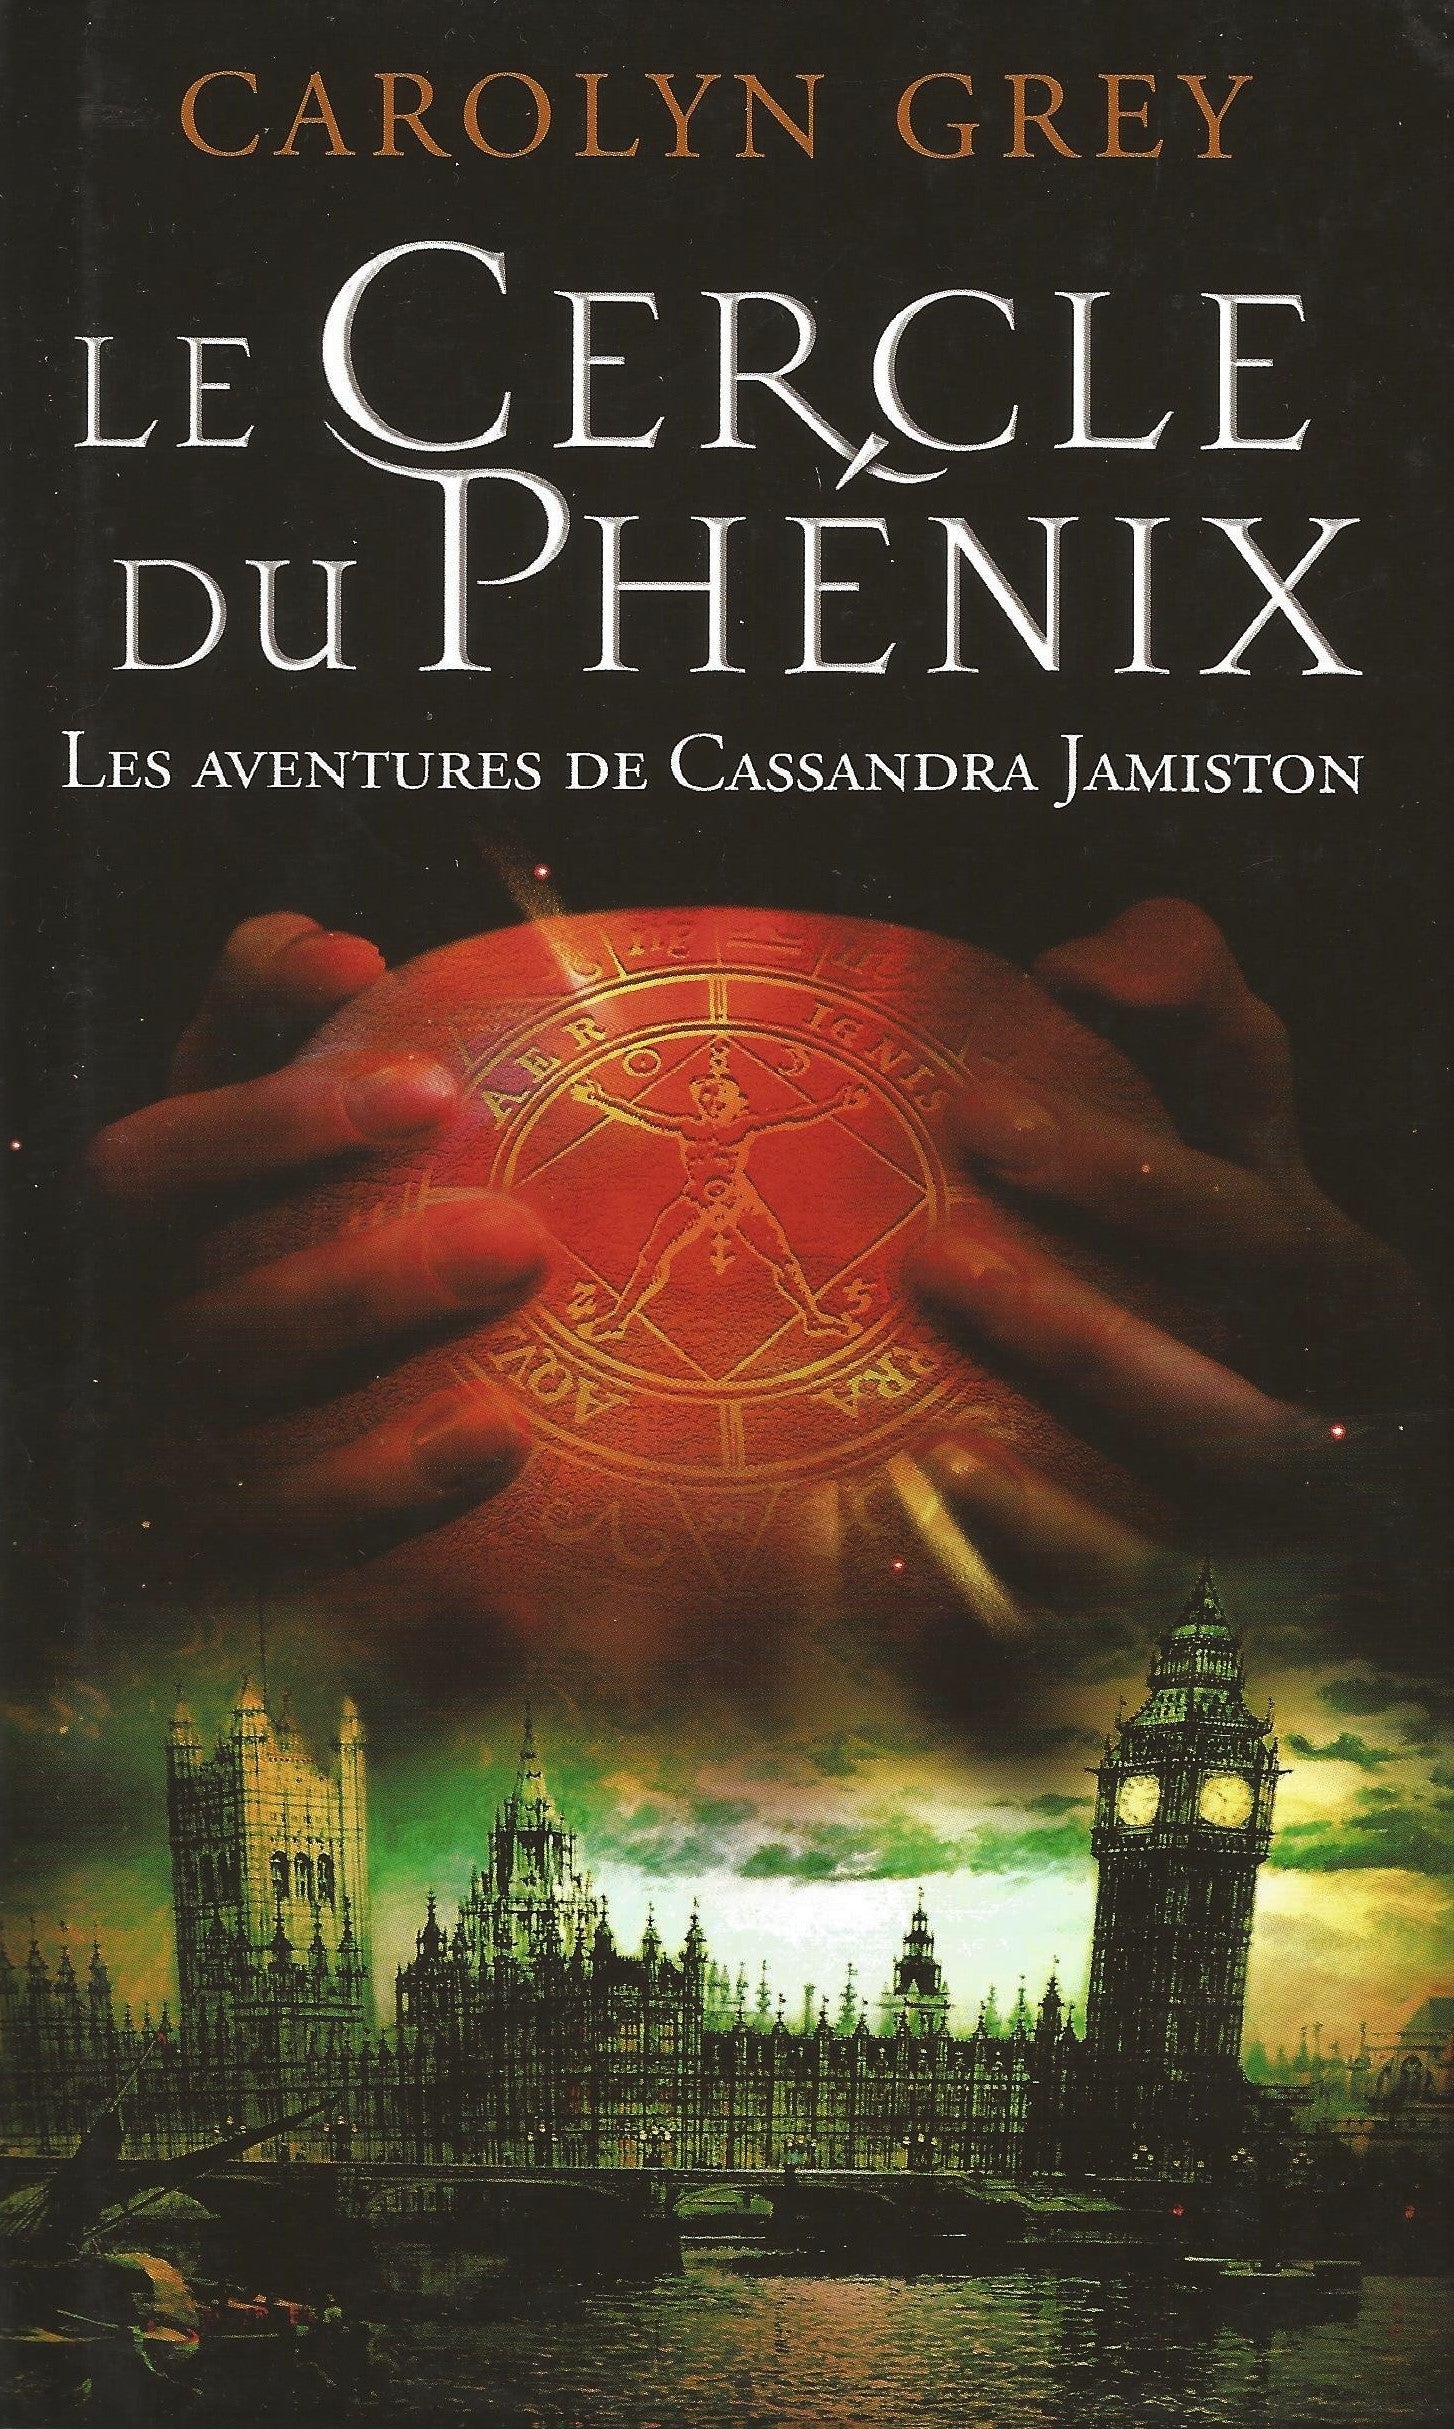 Livre ISBN 2298019444 Le cercle du phenix (Carolyn Grey)